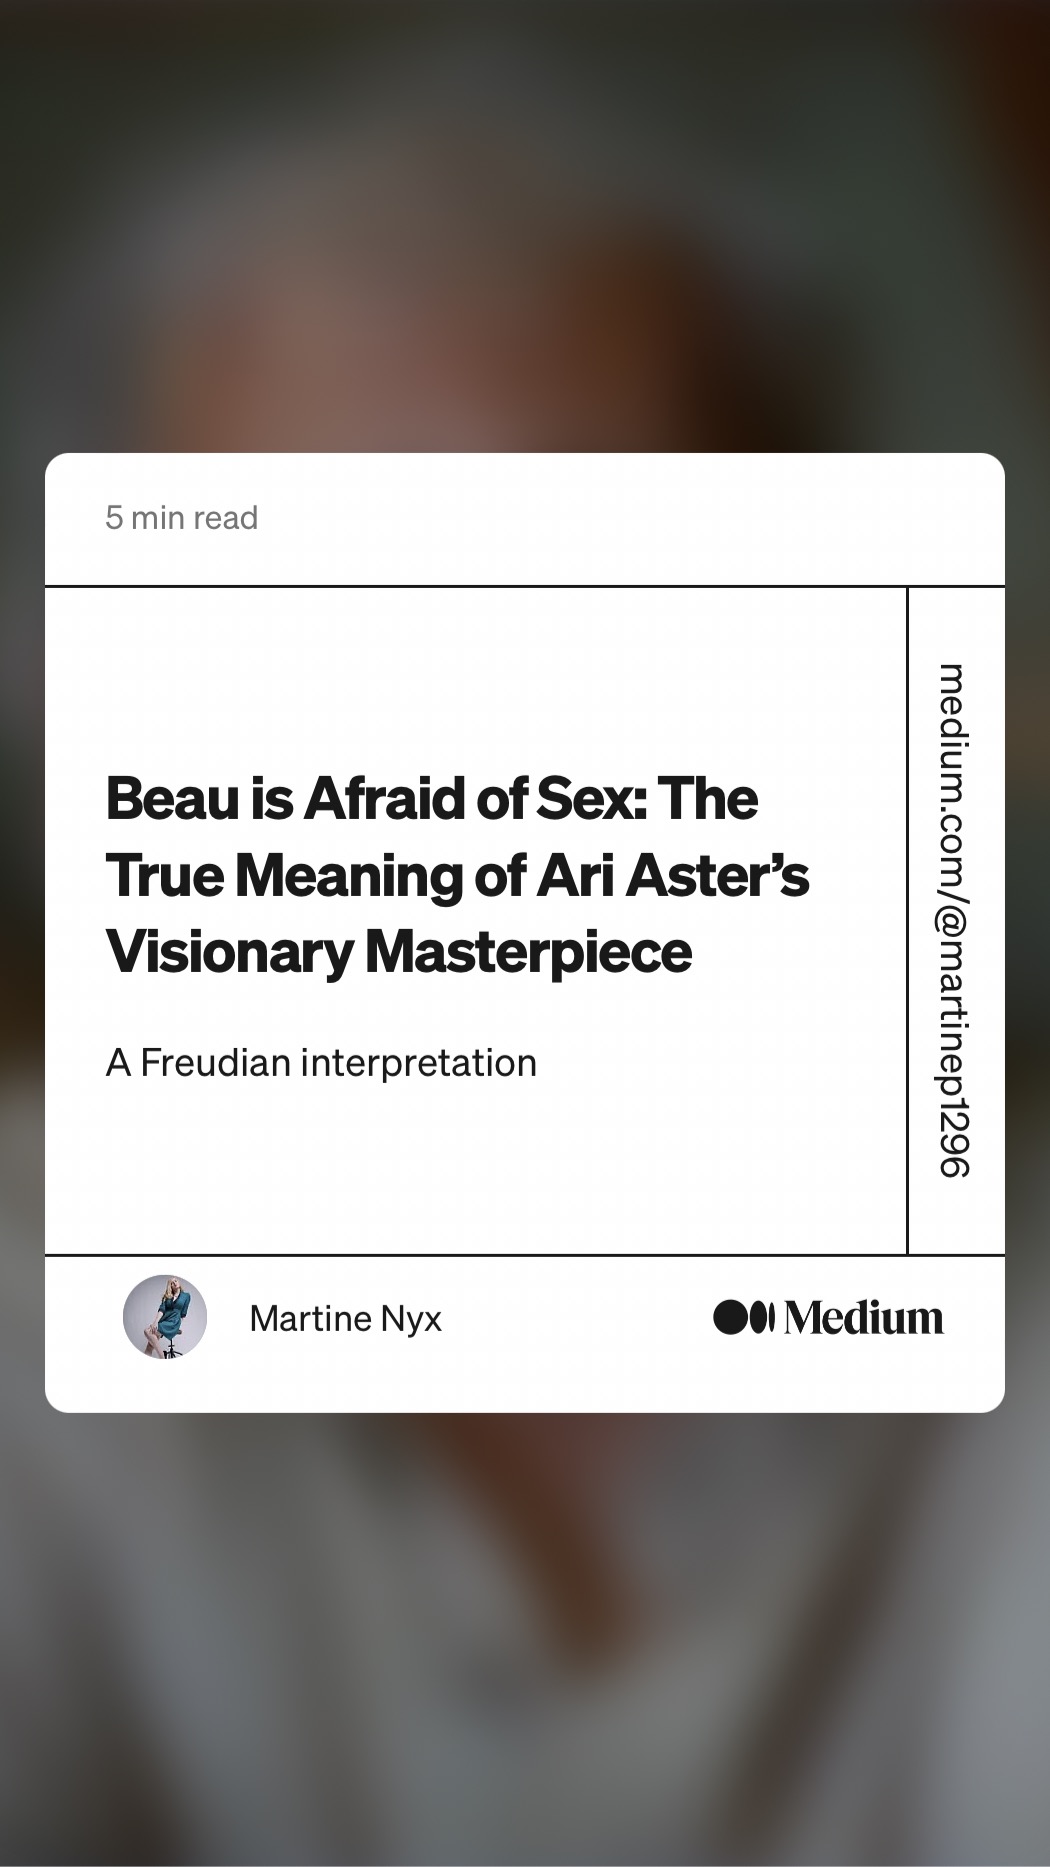 Beau is Afraid of Sex: The
True Meaning of Ari Aster’s
Visionary Masterpiece

A Freudian interpretation

96gLdauIRW®/WOo WNipaw

& Martine Nyx @0 Medium